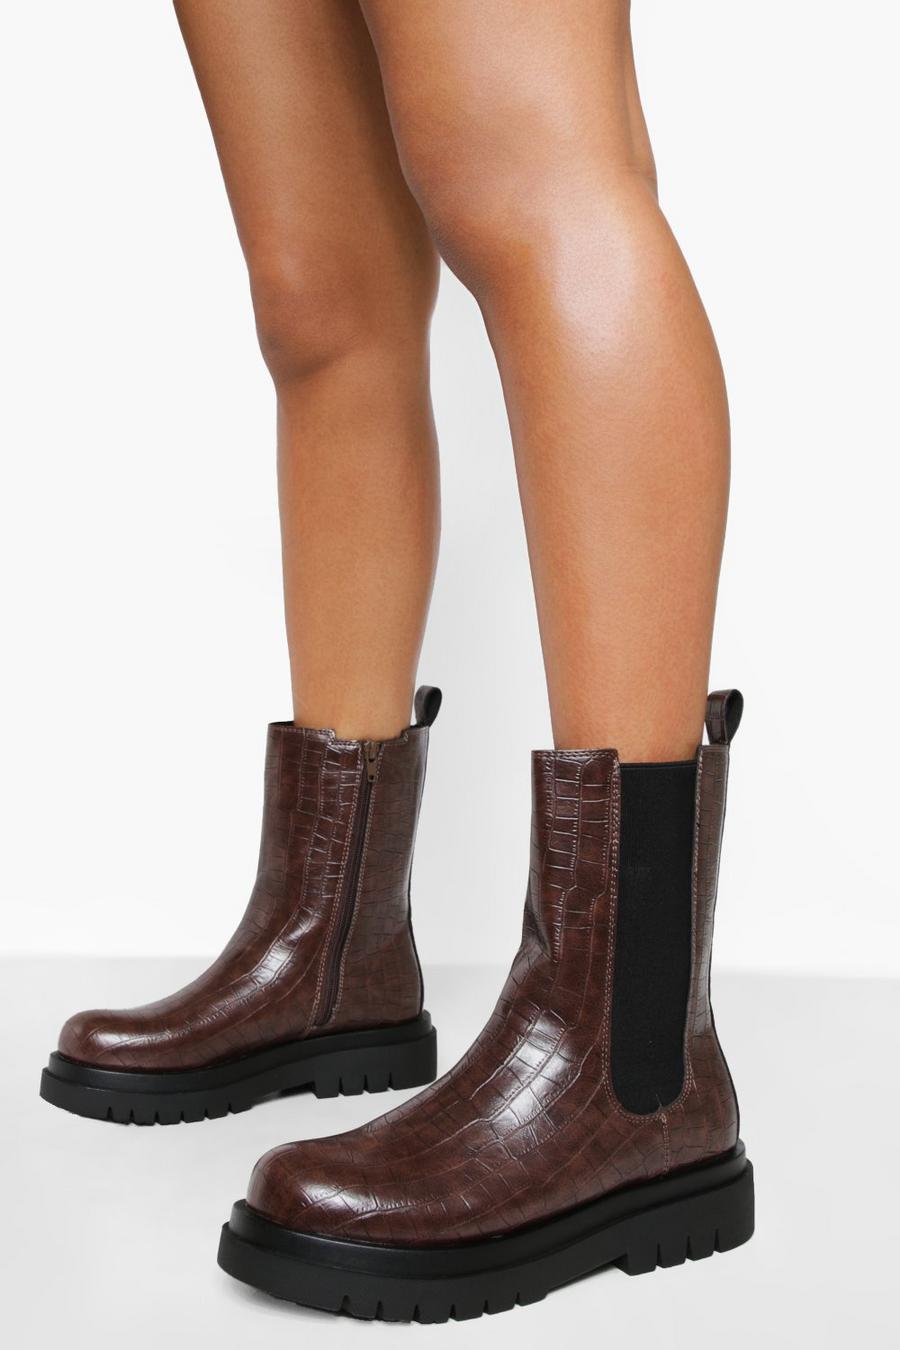 220V boots Brown 35                  EU discount 70% WOMEN FASHION Footwear Boots Split leather 